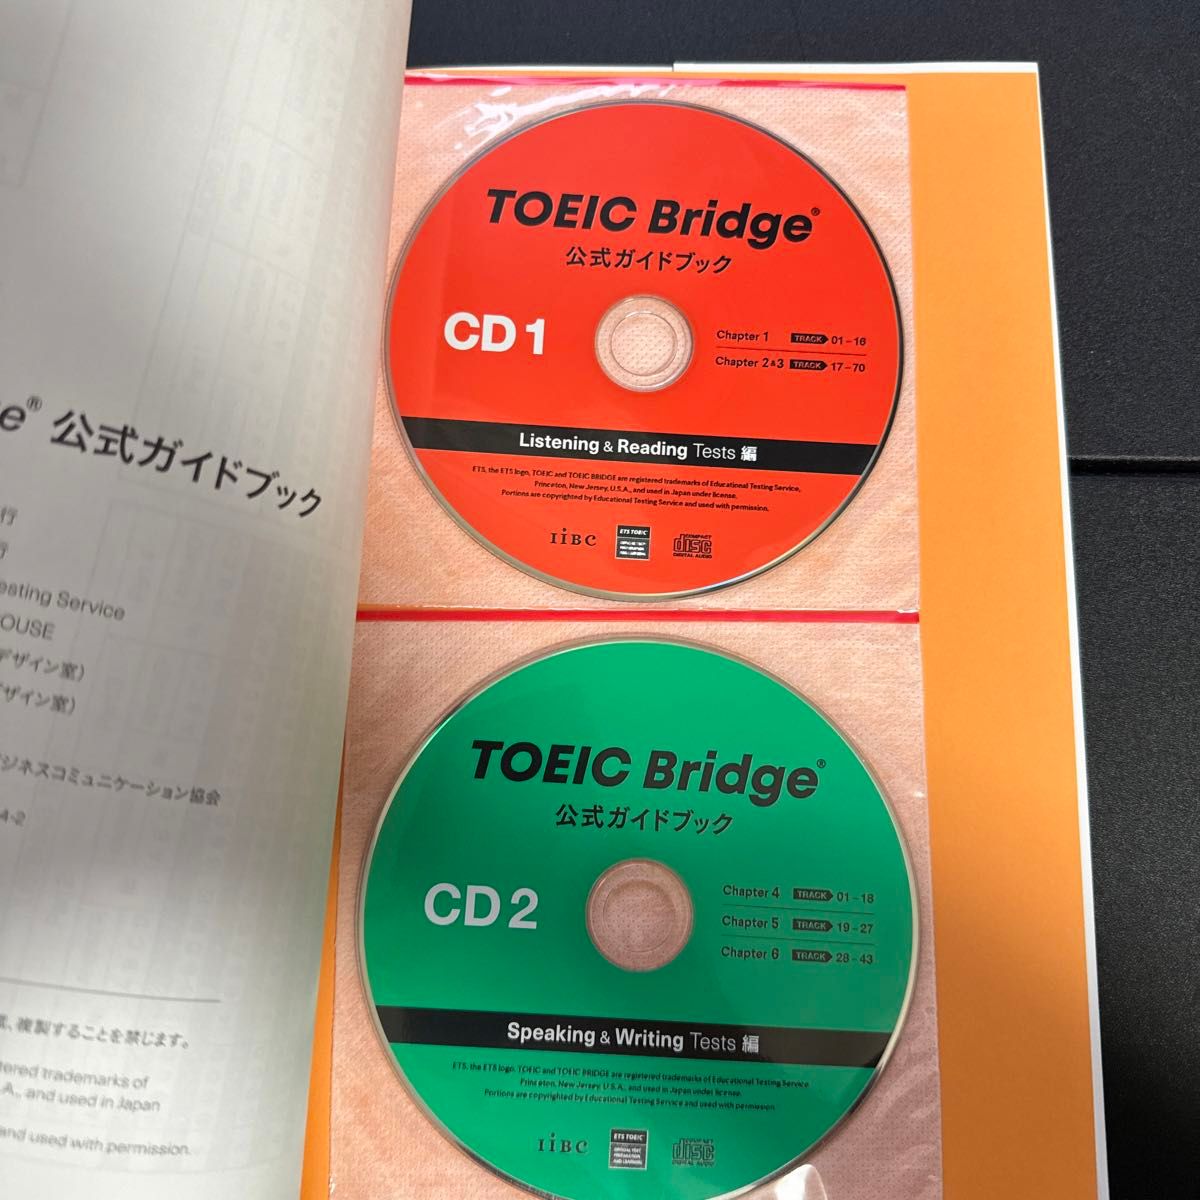 TOEIC Bridge公式